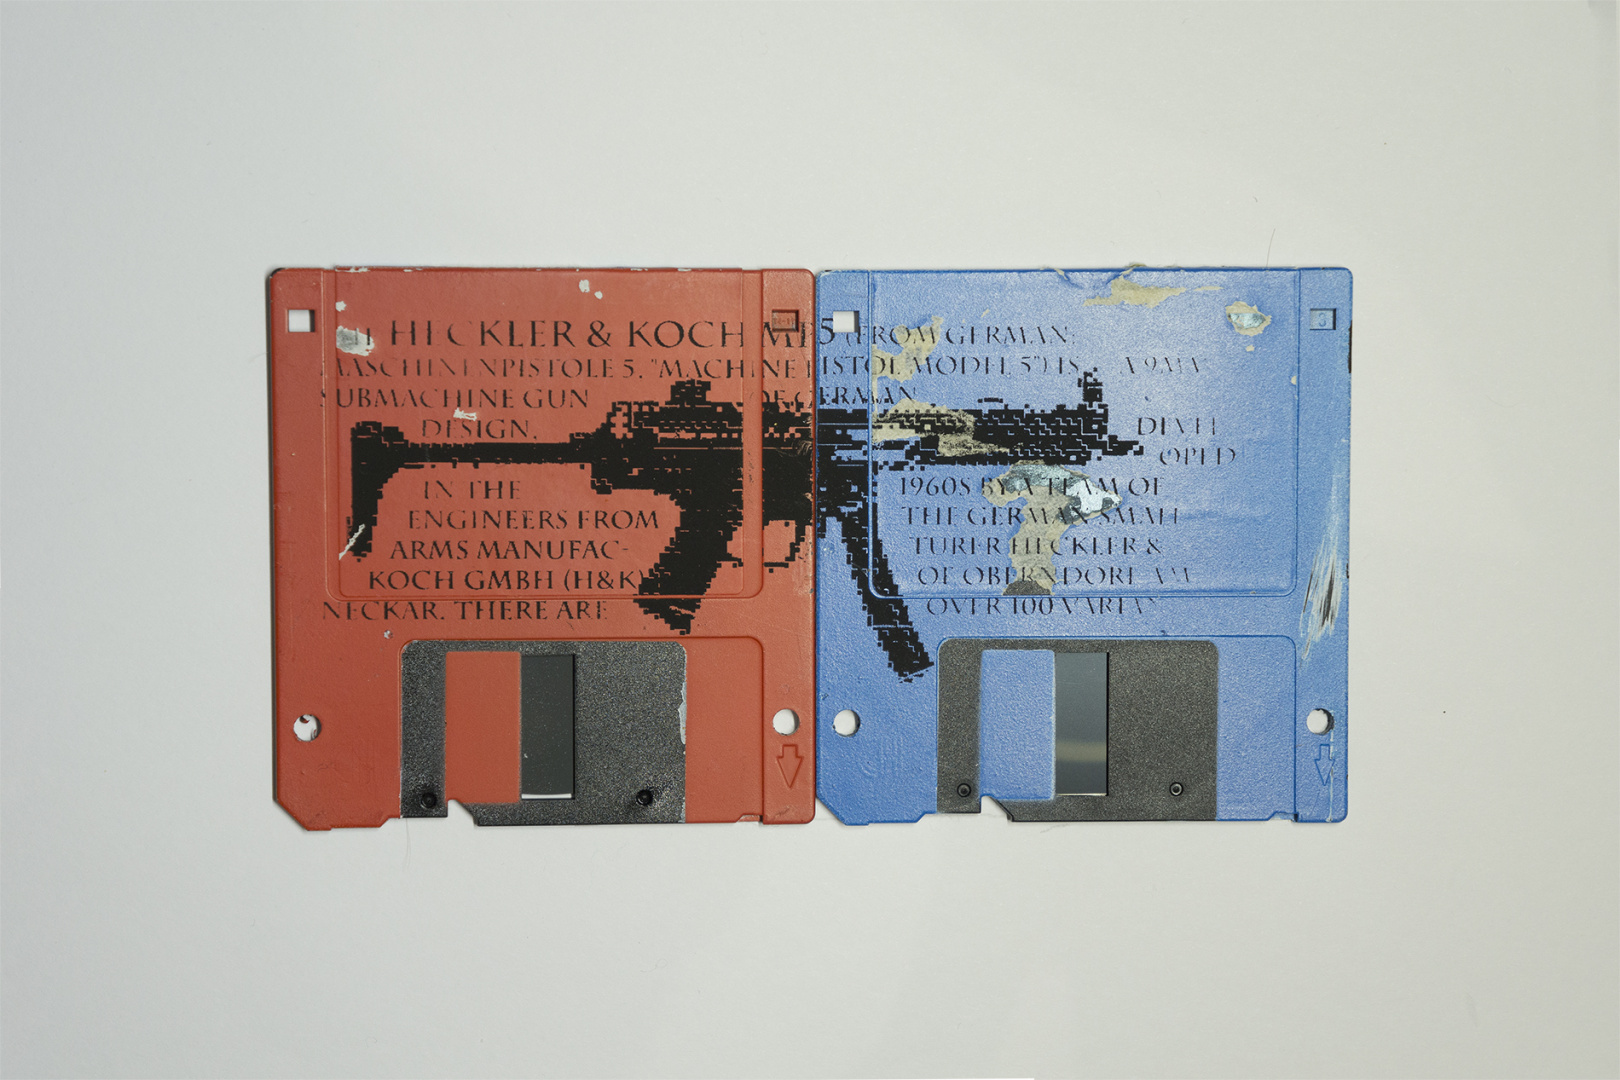 8bit MP5 weapon - slik screen artwork - floppy disk